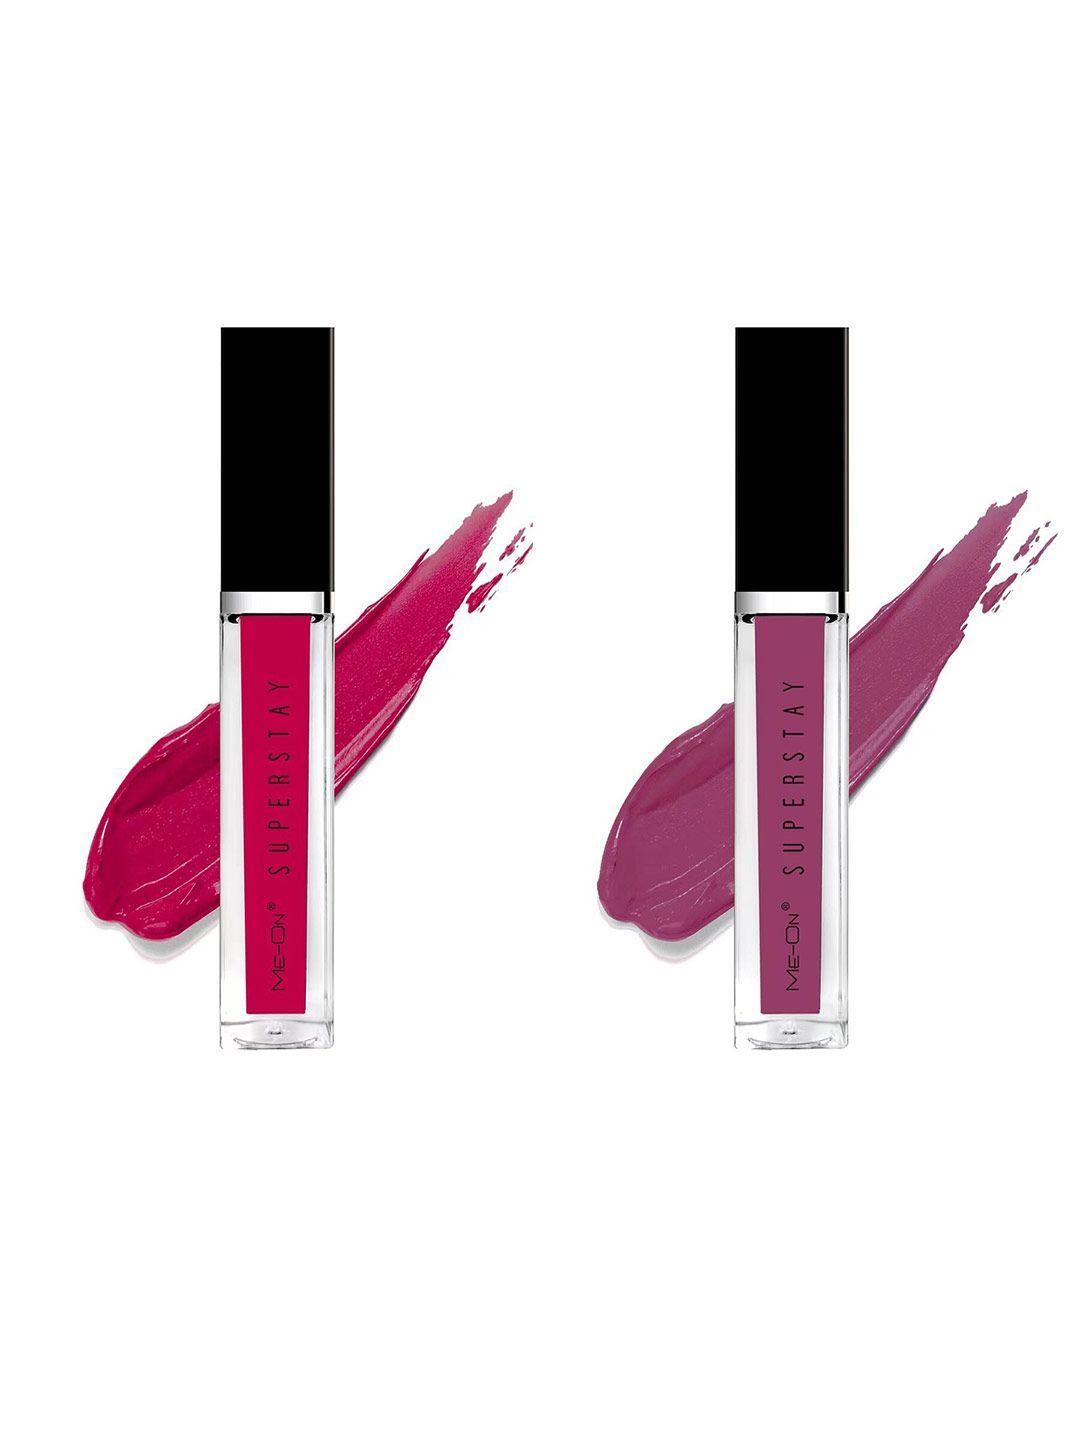 me-on set of 2 super stay lip gloss 6ml each - sensual rose 11 & mauve story 24